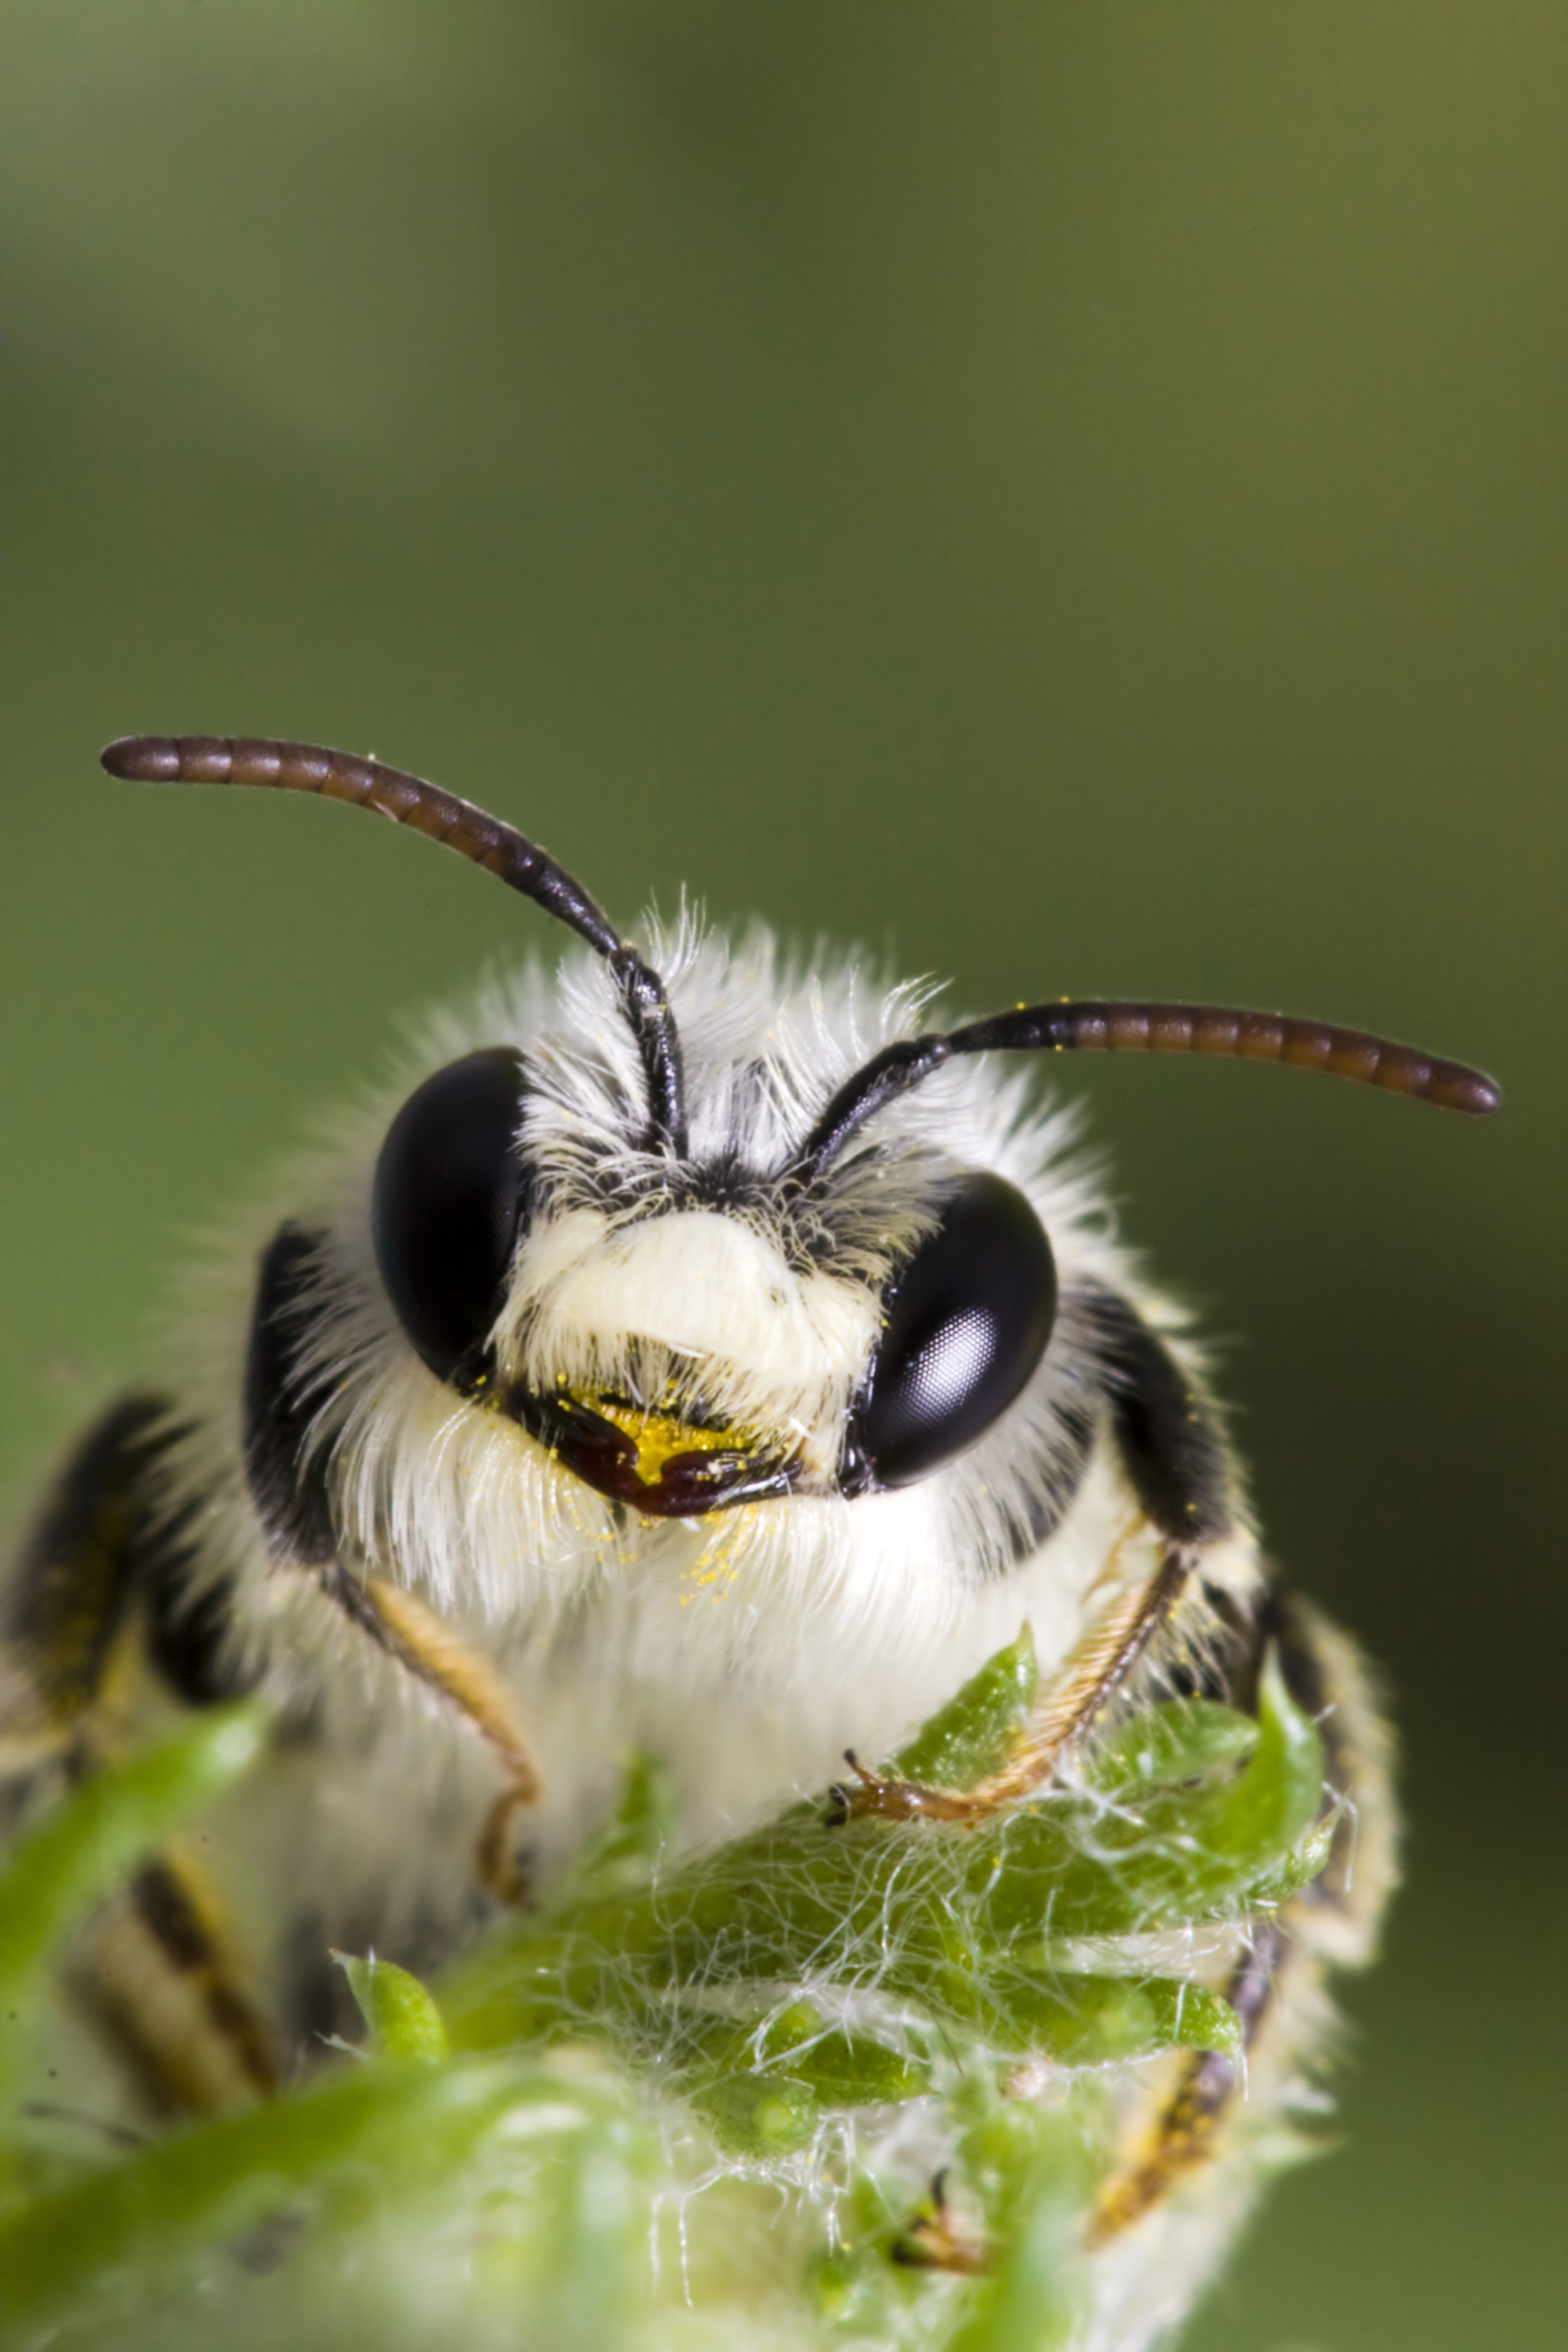 cute bumble bee